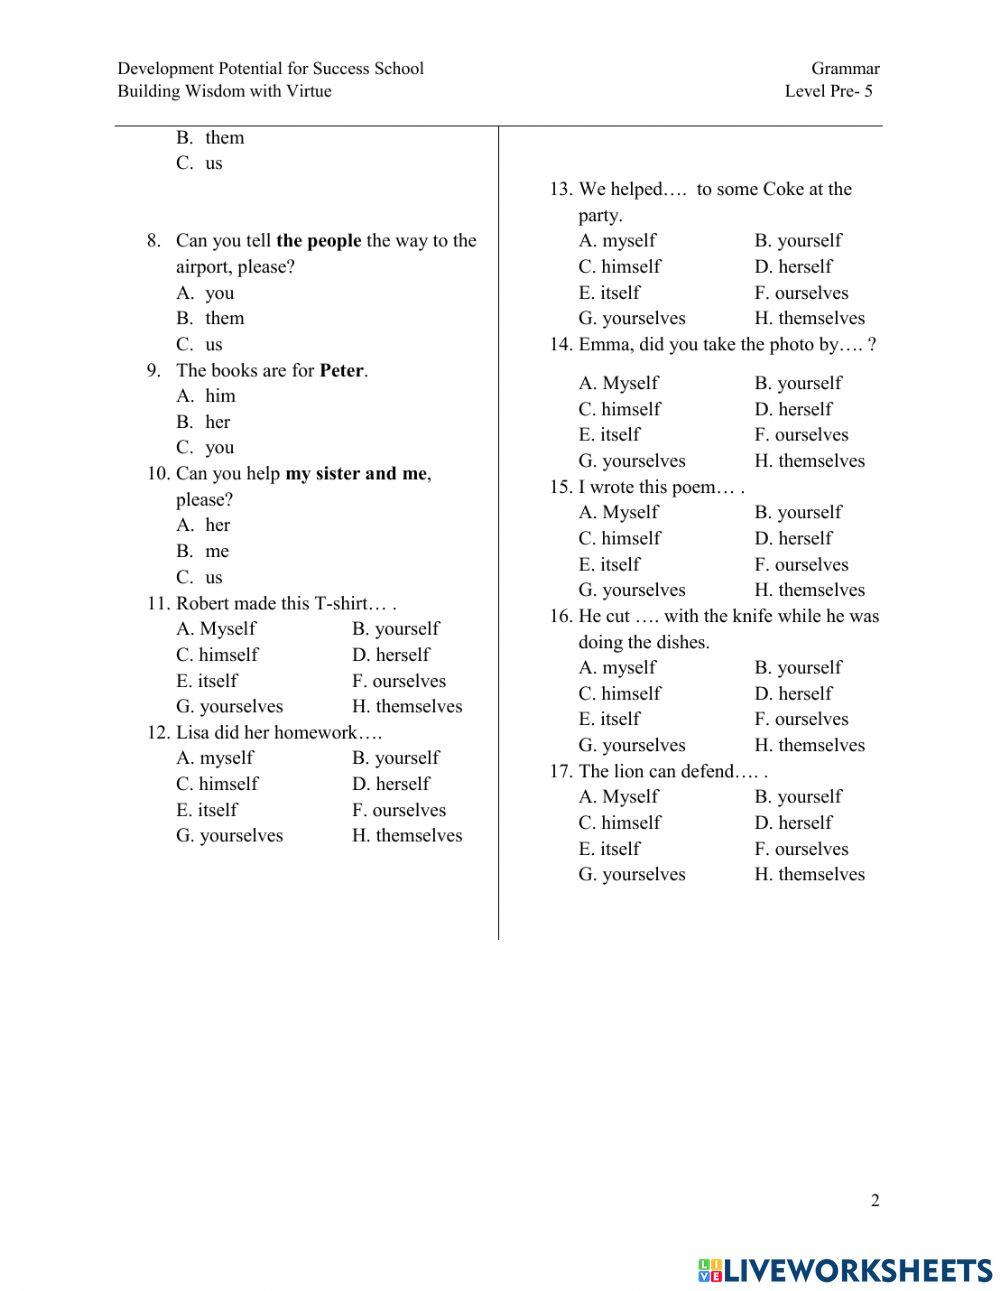 Pre-5 BIG Grammar quiz